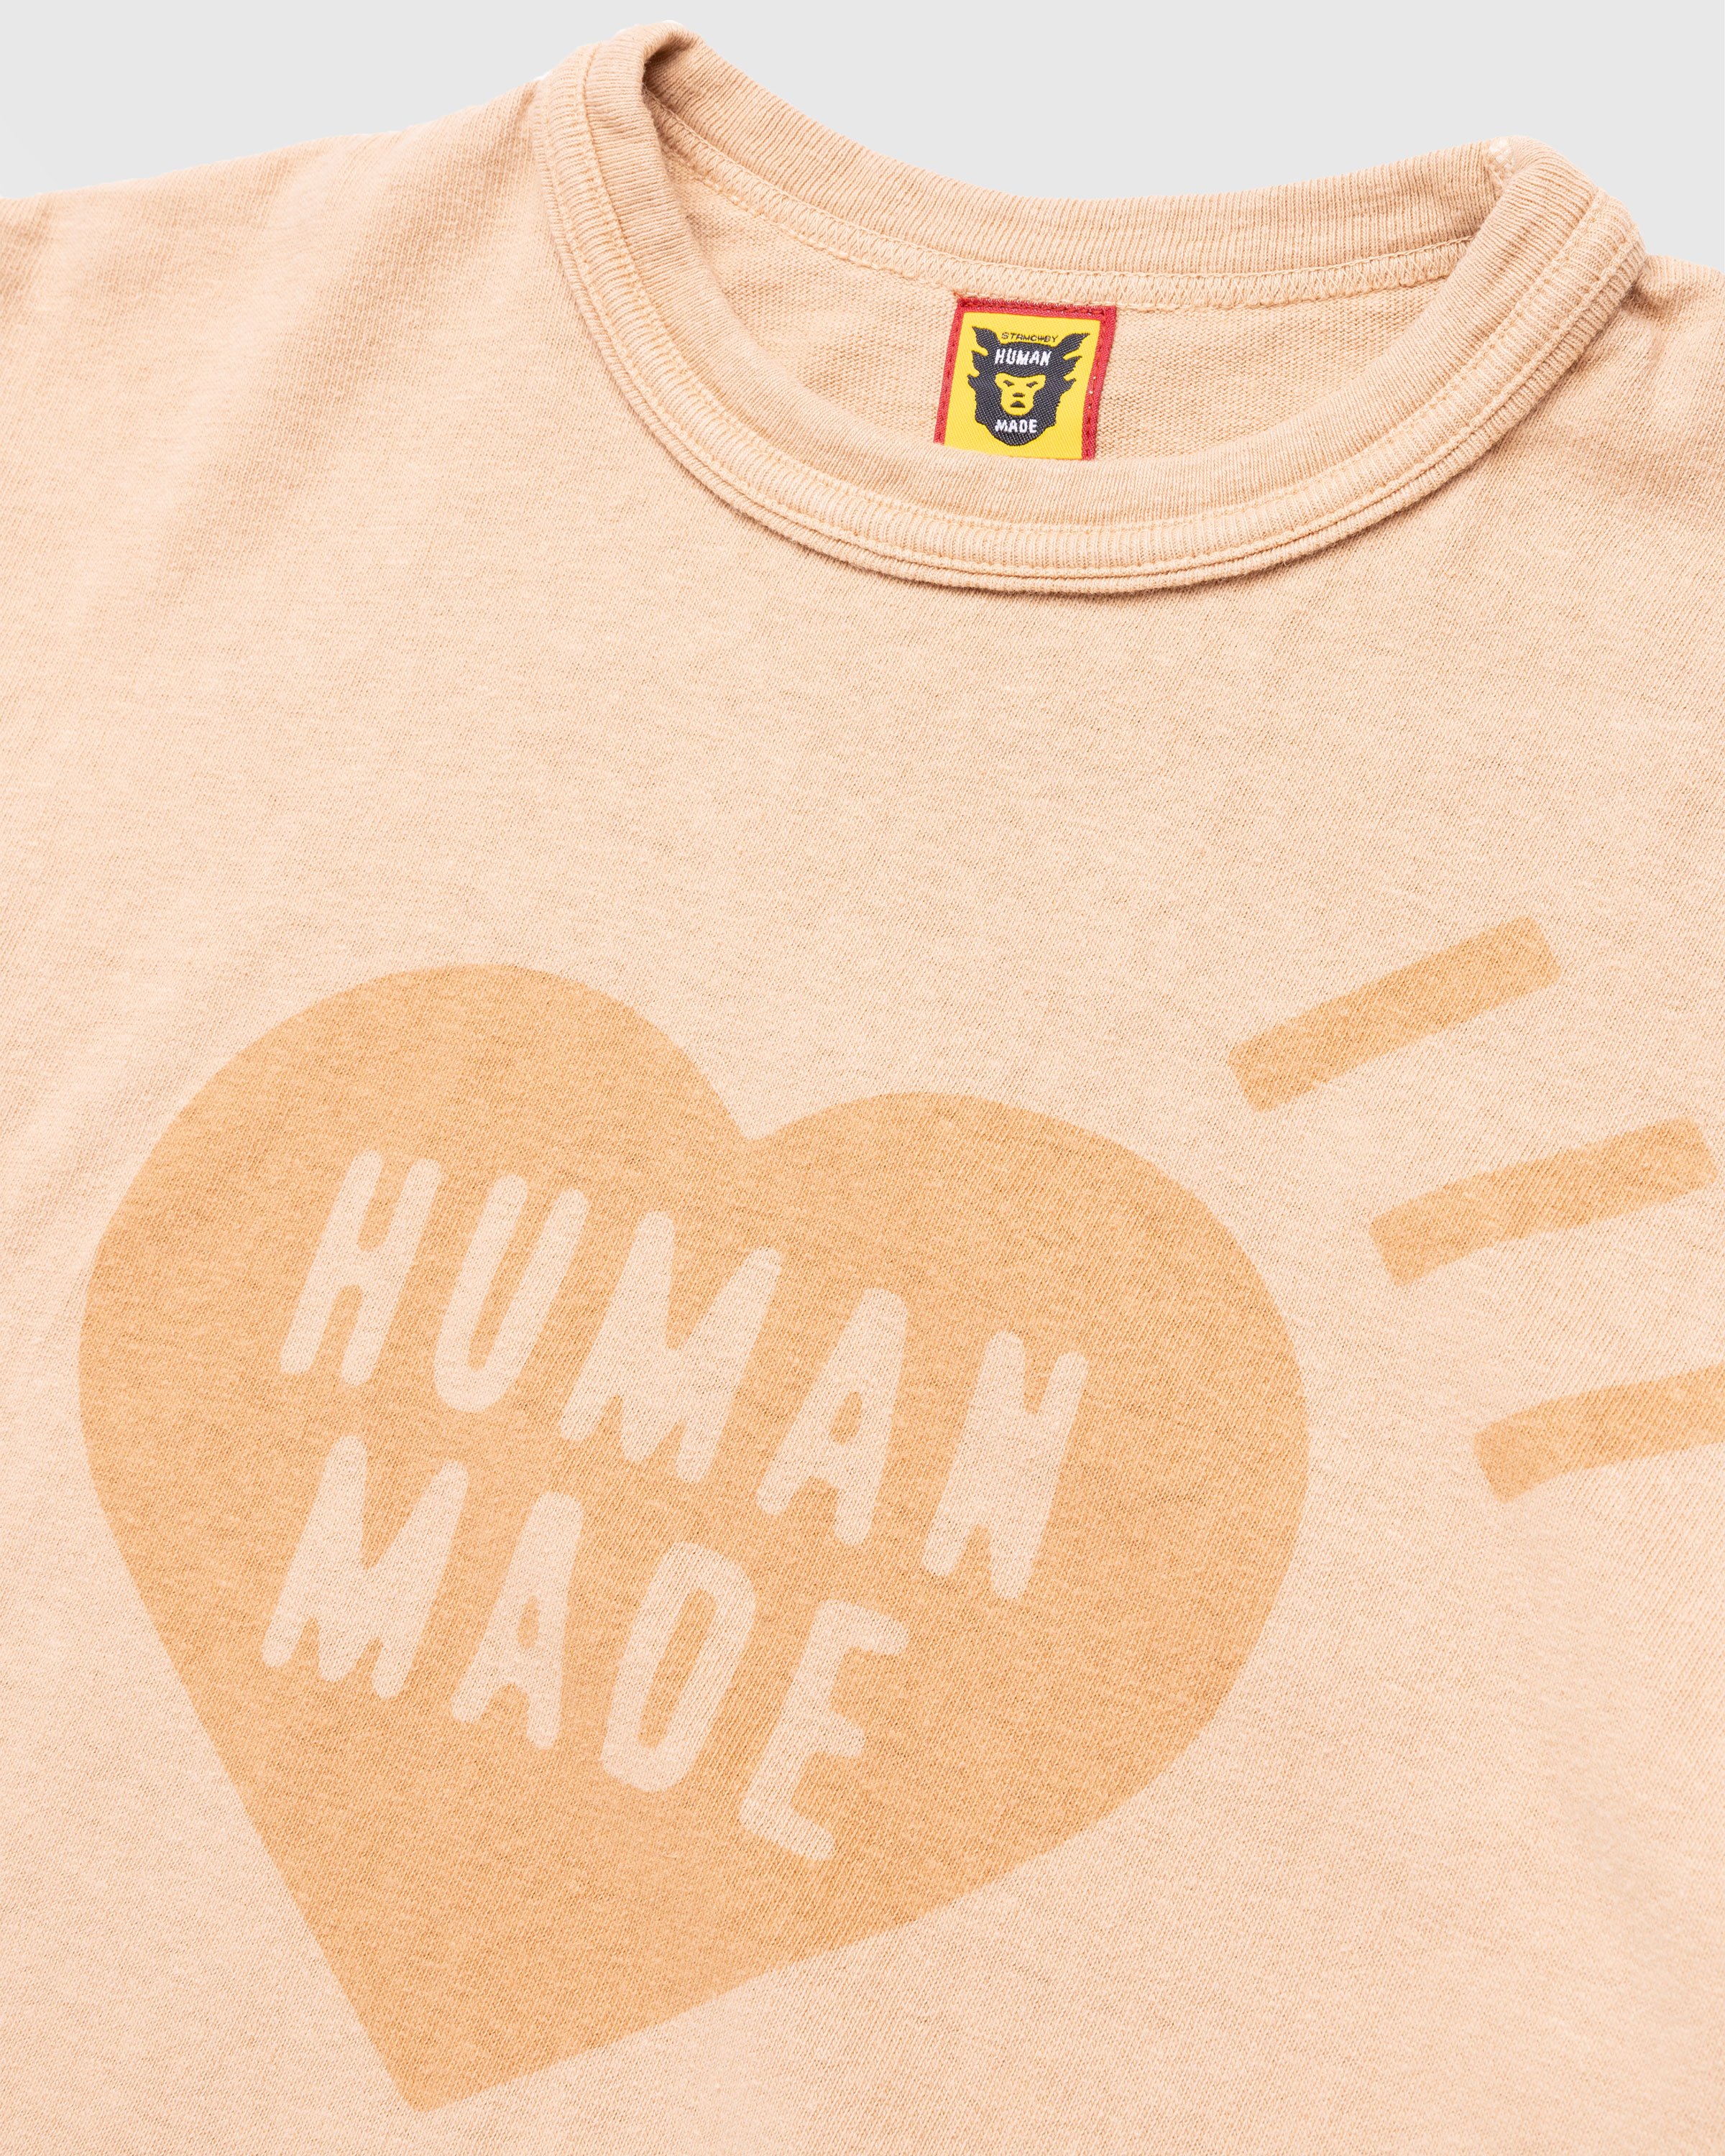 Human Made - Ningen-sei Plant Dyed T-Shirt Beige - Clothing - Beige - Image 5